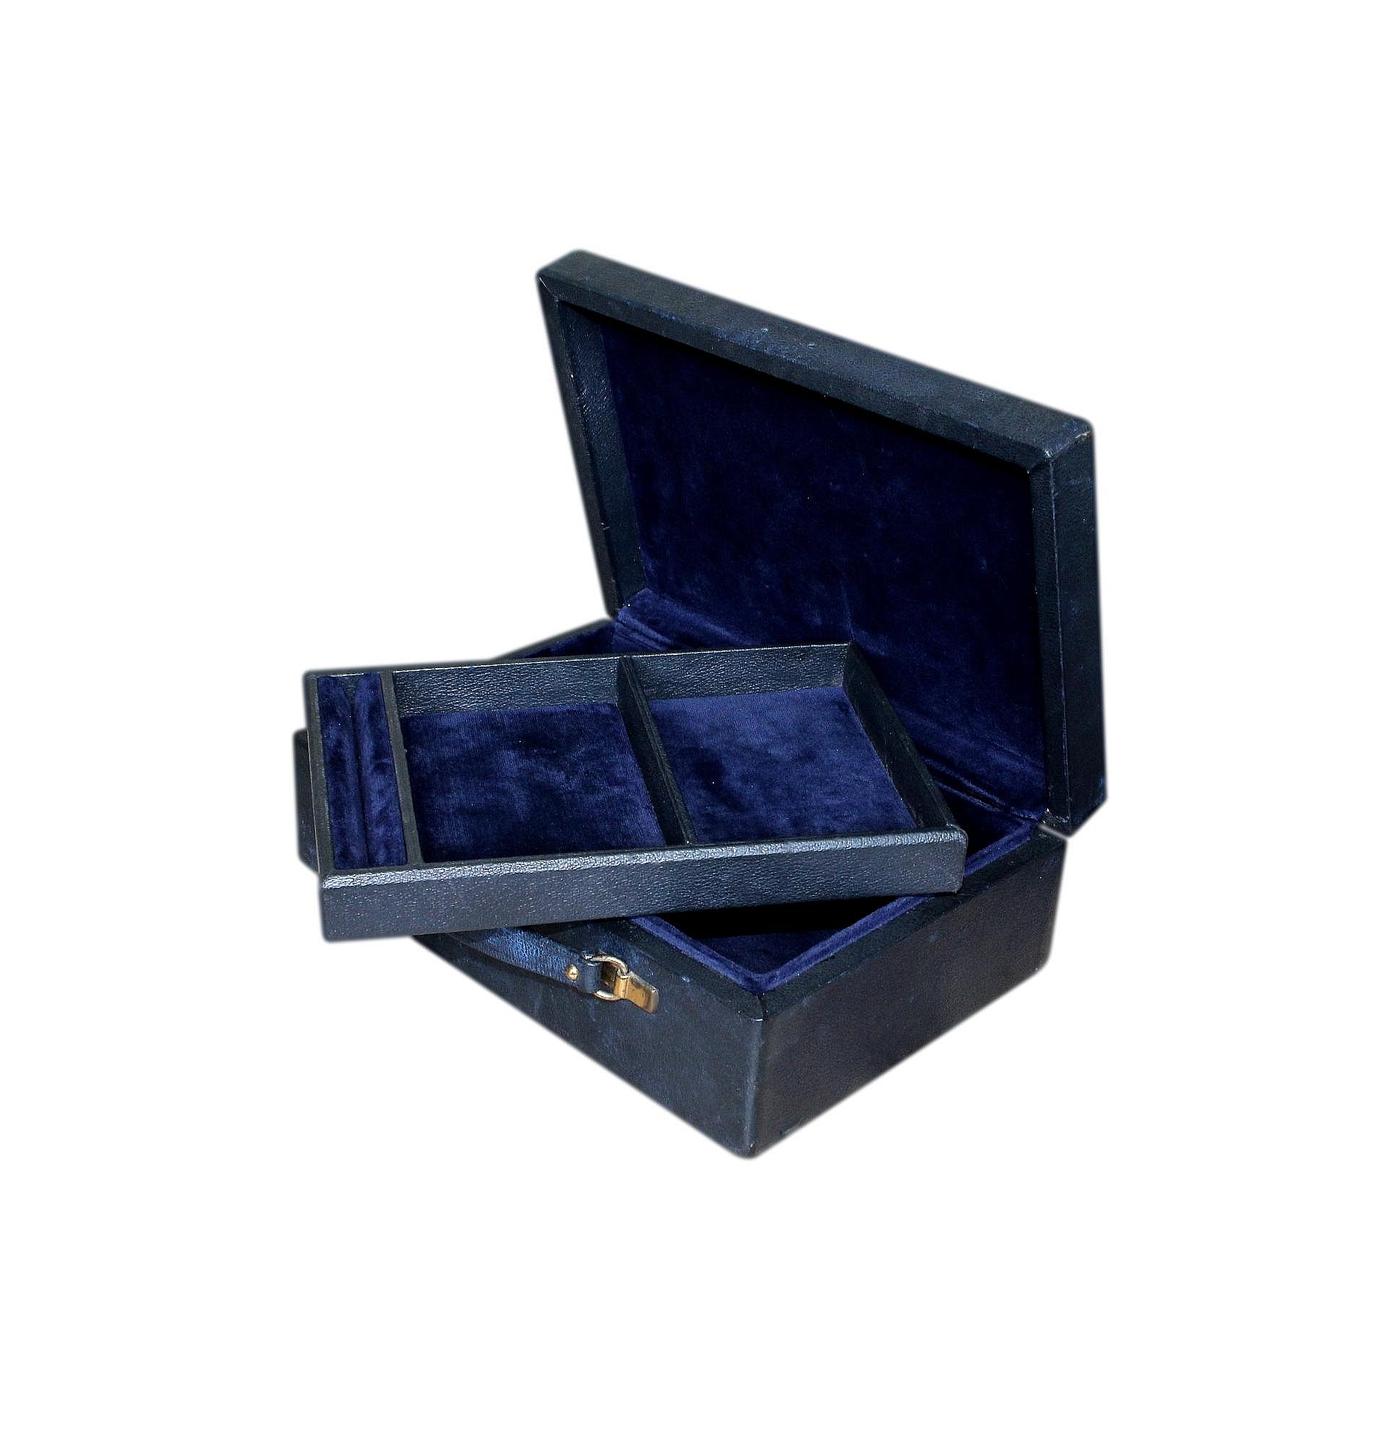 1980s Vintage Navy Blue Leather Jewellery Box